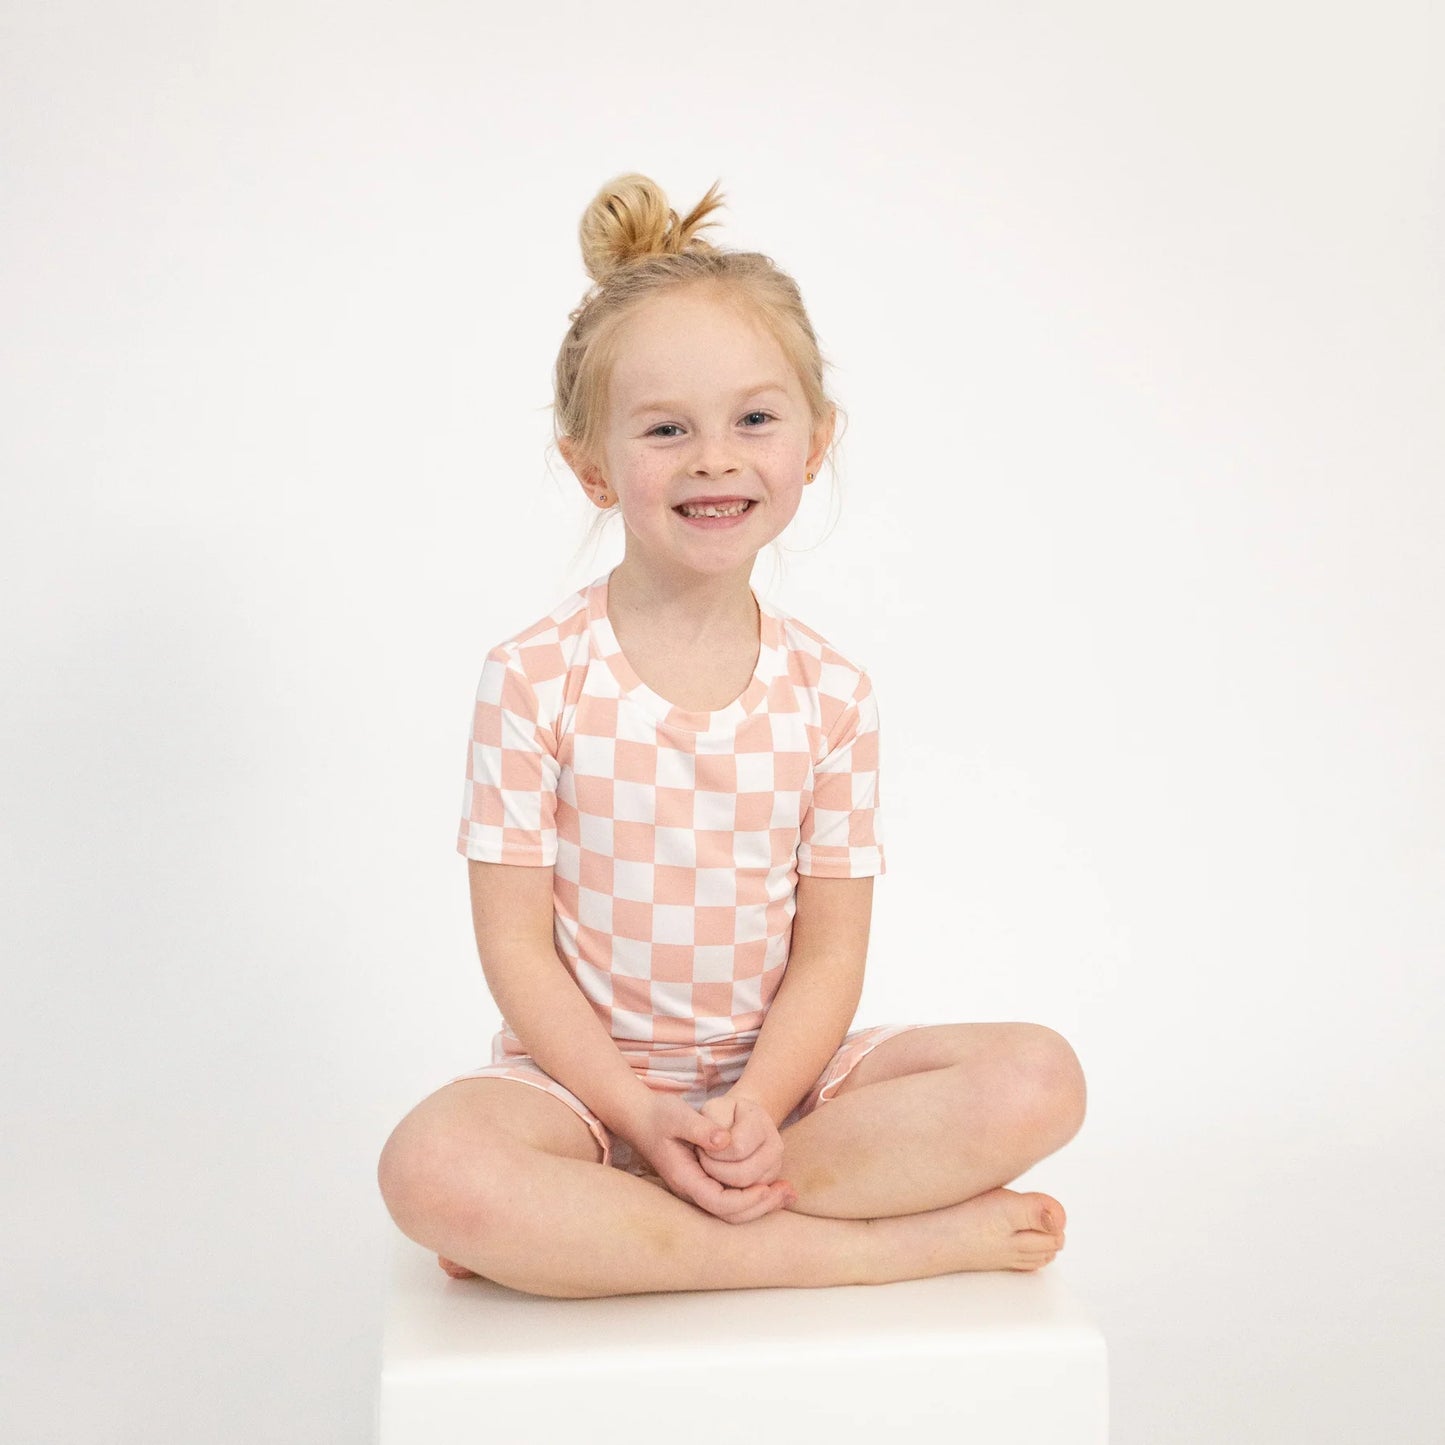 Loungewear Short Set in Checkerboard Pink  - Doodlebug's Children's Boutique